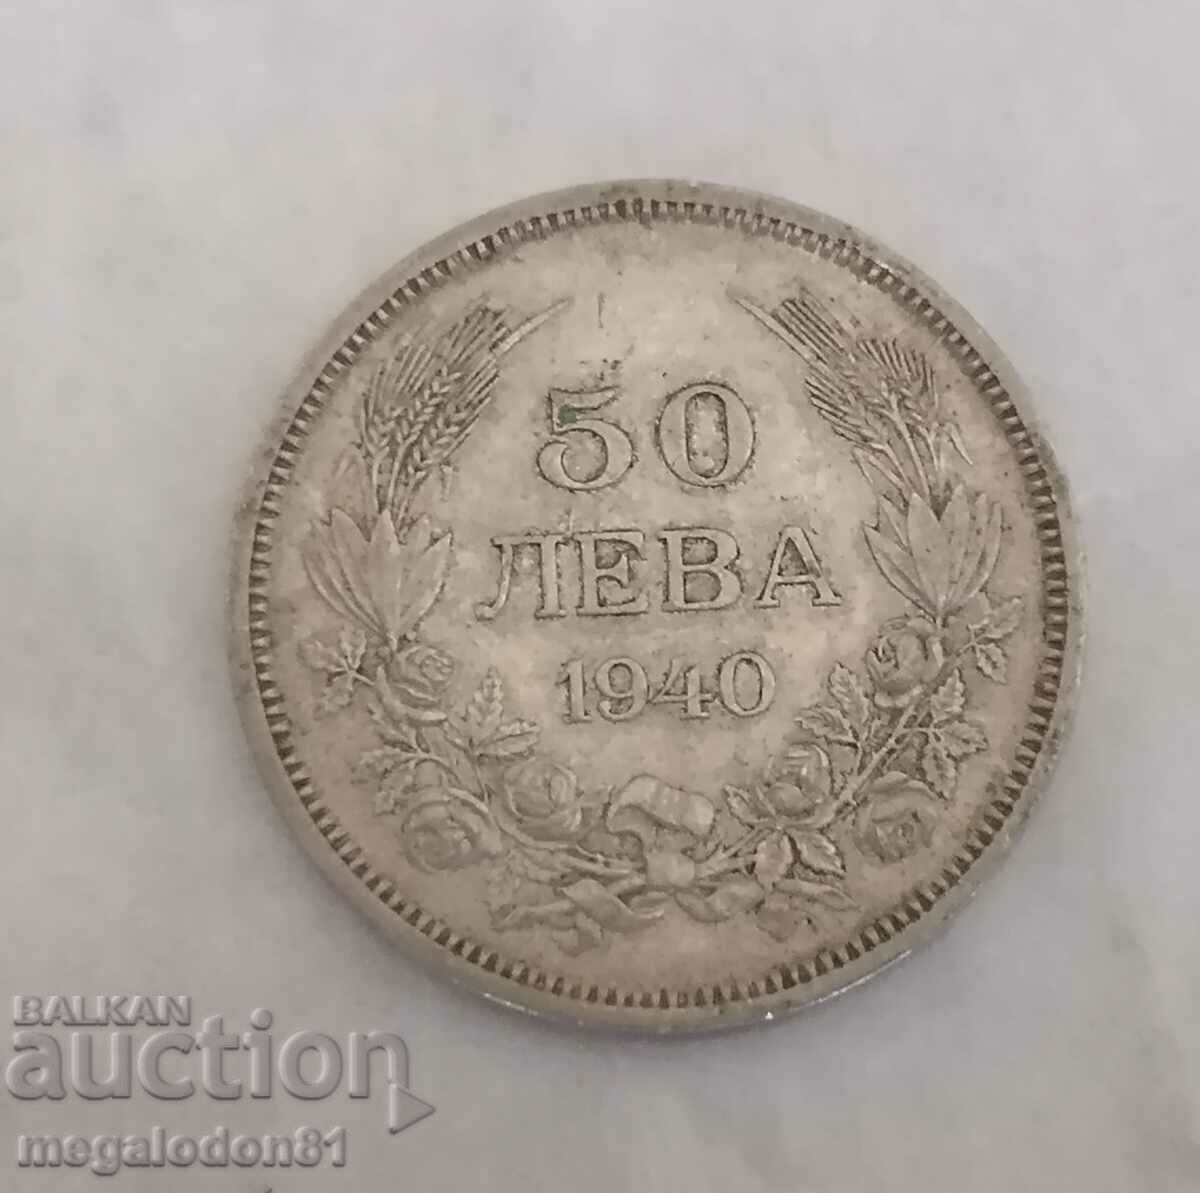 Bulgaria - BGN 50 1940